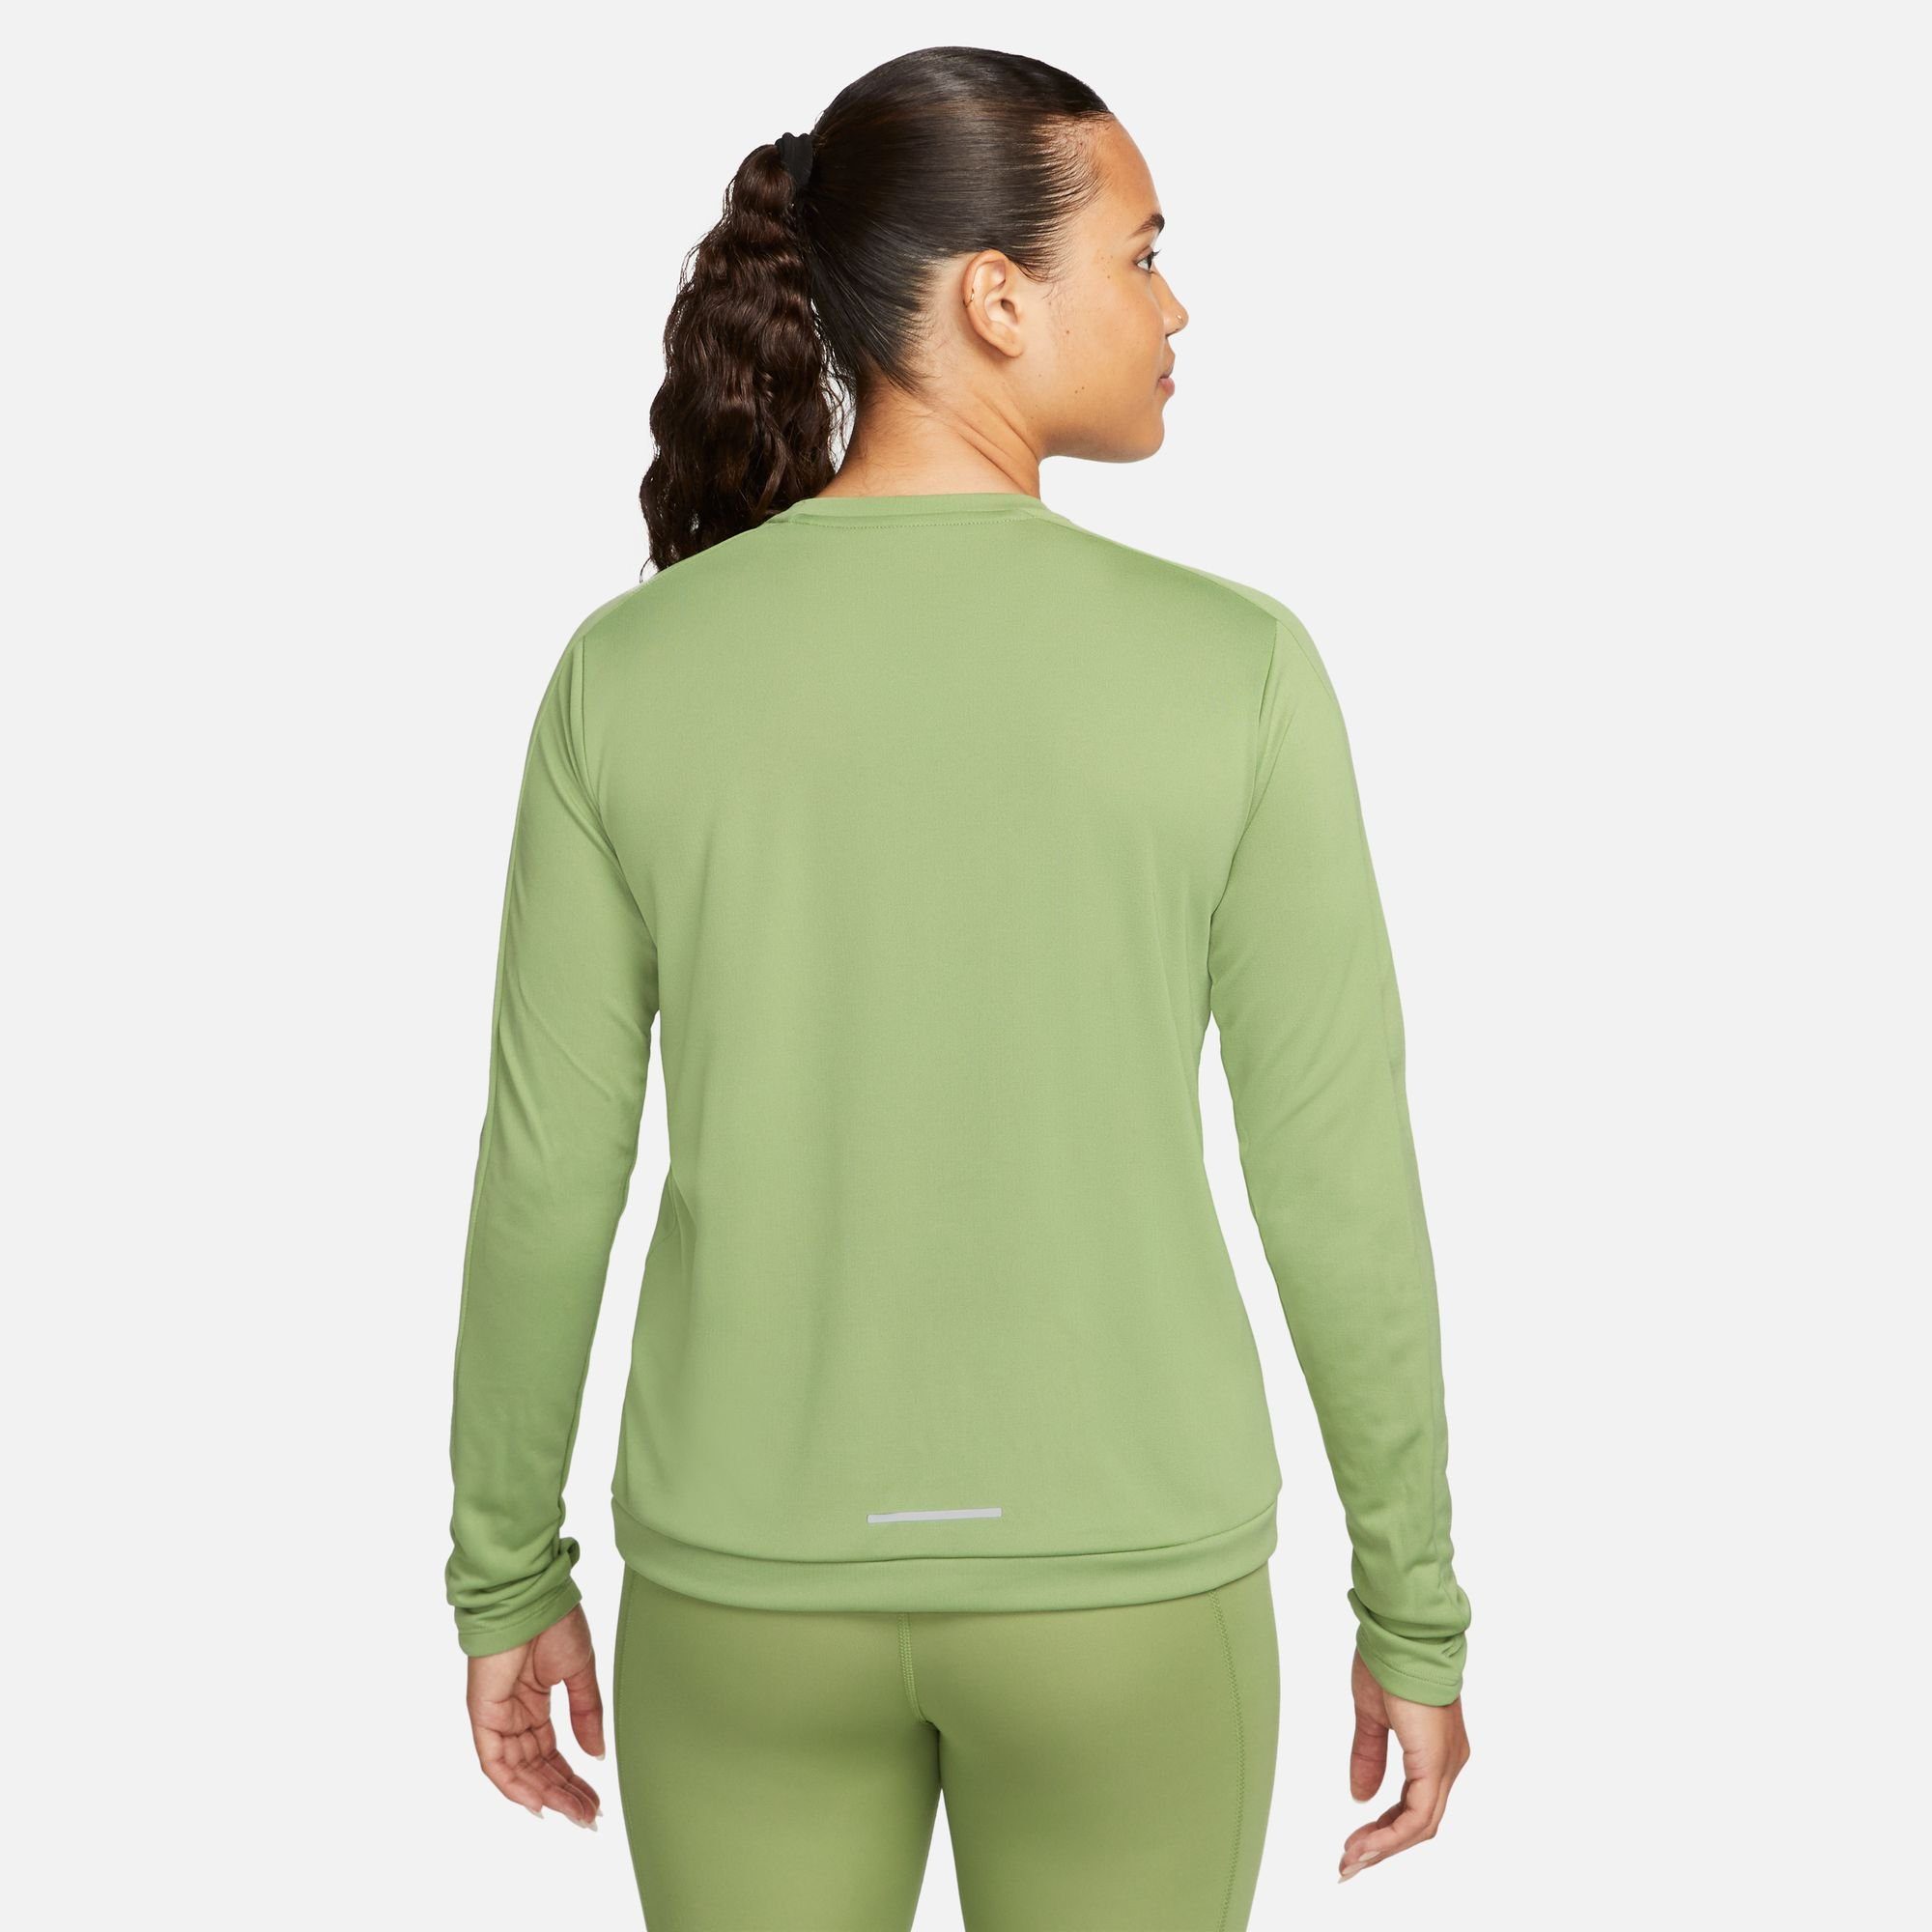 DRI-FIT RUNNING Nike WOMEN'S TOP grün Laufshirt CREW-NECK